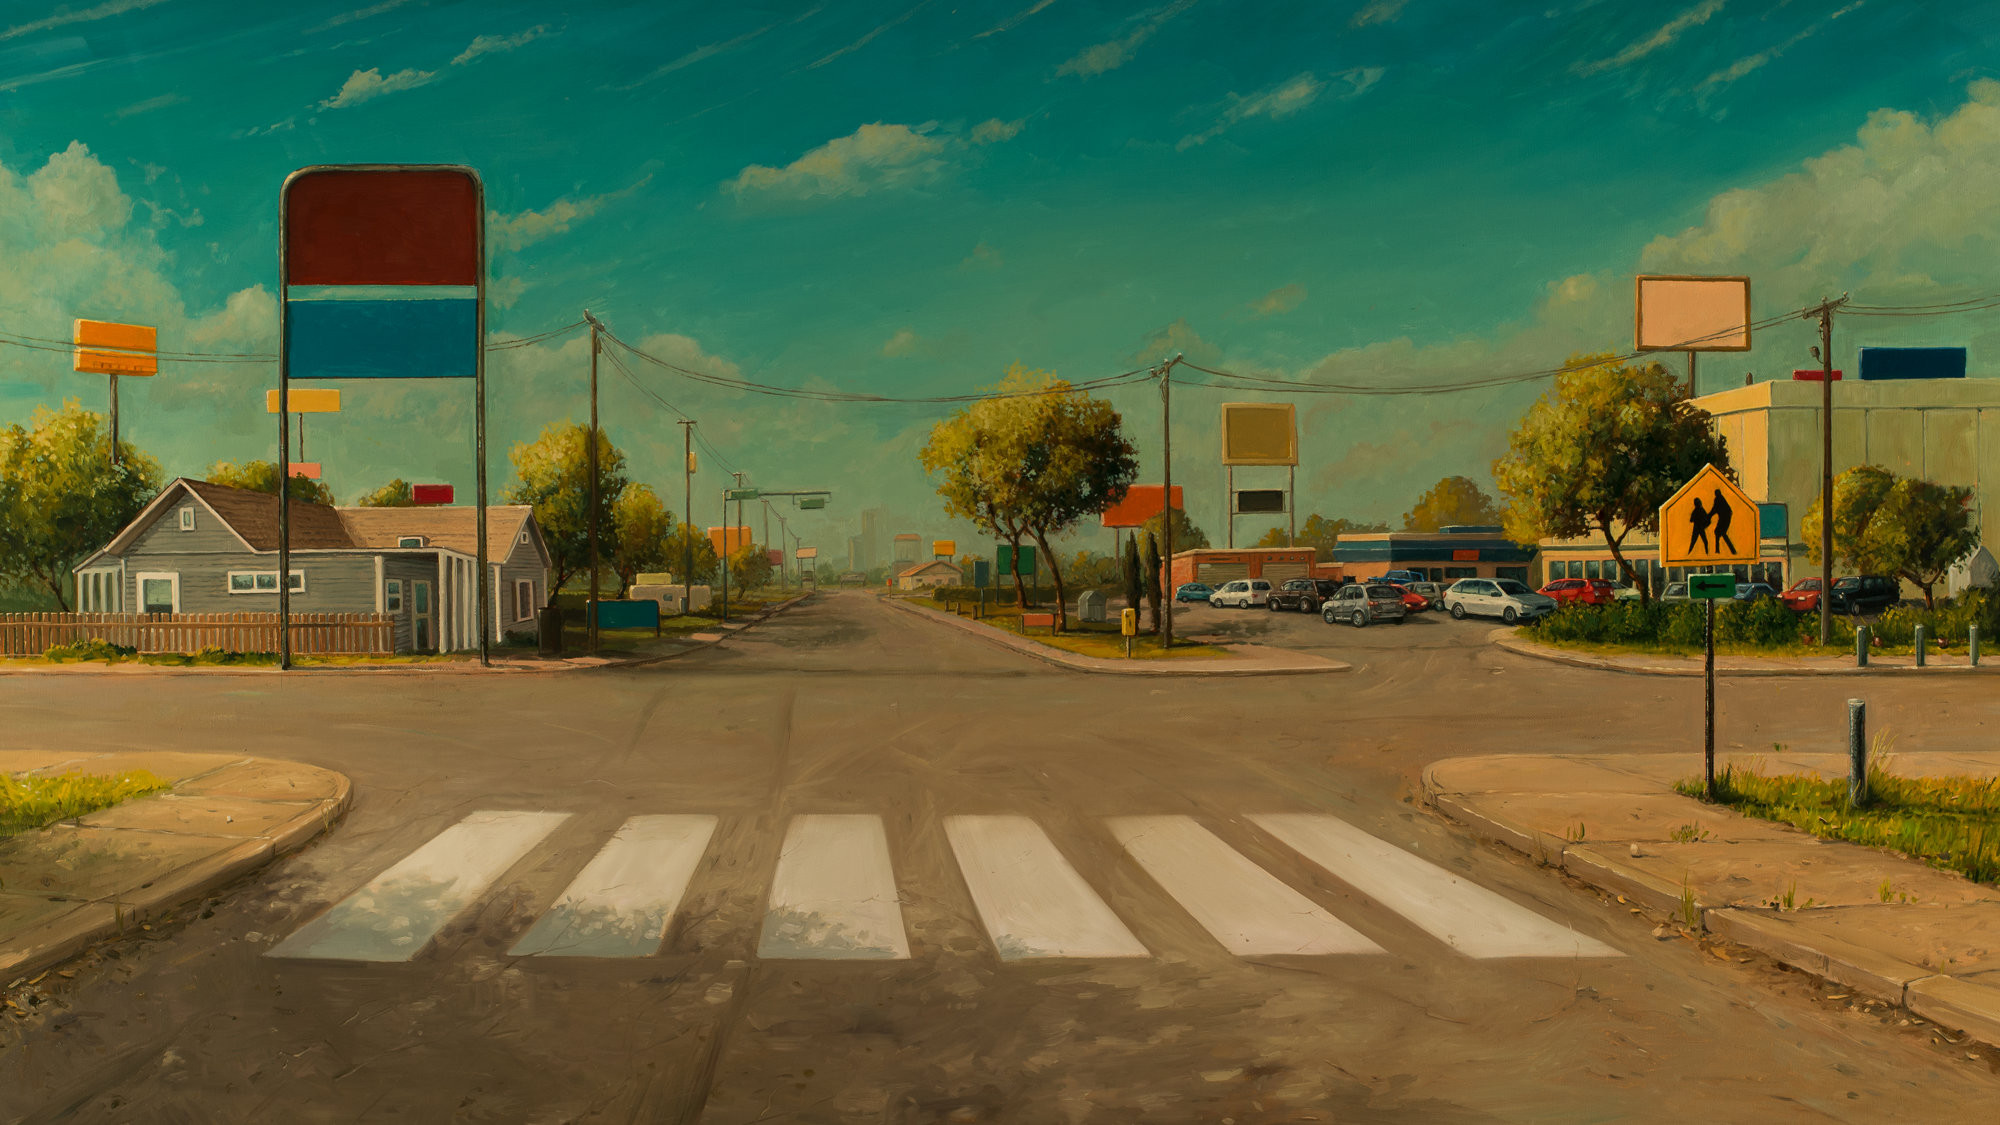 General 2000x1125 Undone interpolated rotoscoping Jakub Podlodowski oil painting San Antonio road clouds sky trees signs crosswalk digital art